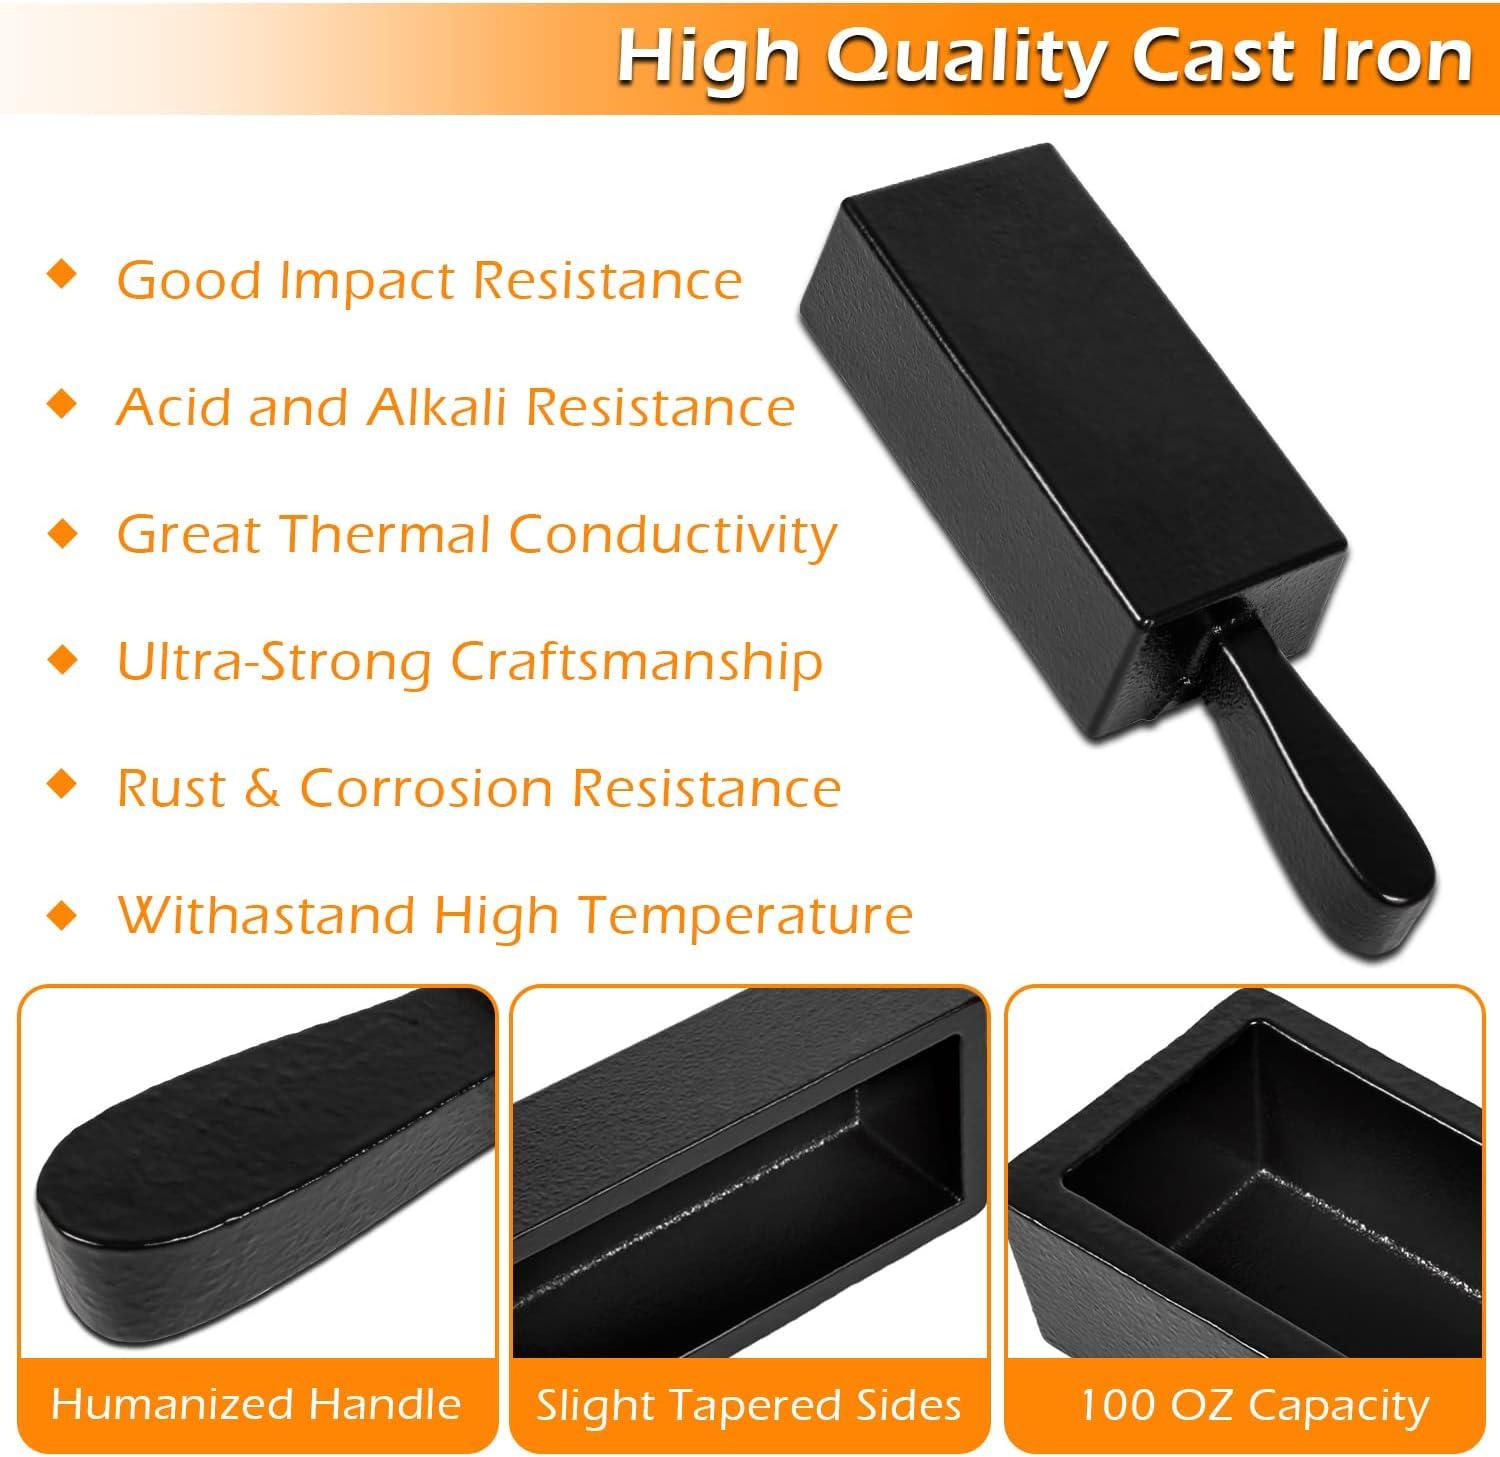 100 oz Cast Steel Ingot Mold for Melting Casting Refining Gold Silver  Copper Aluminum Brass Precious Metals etc